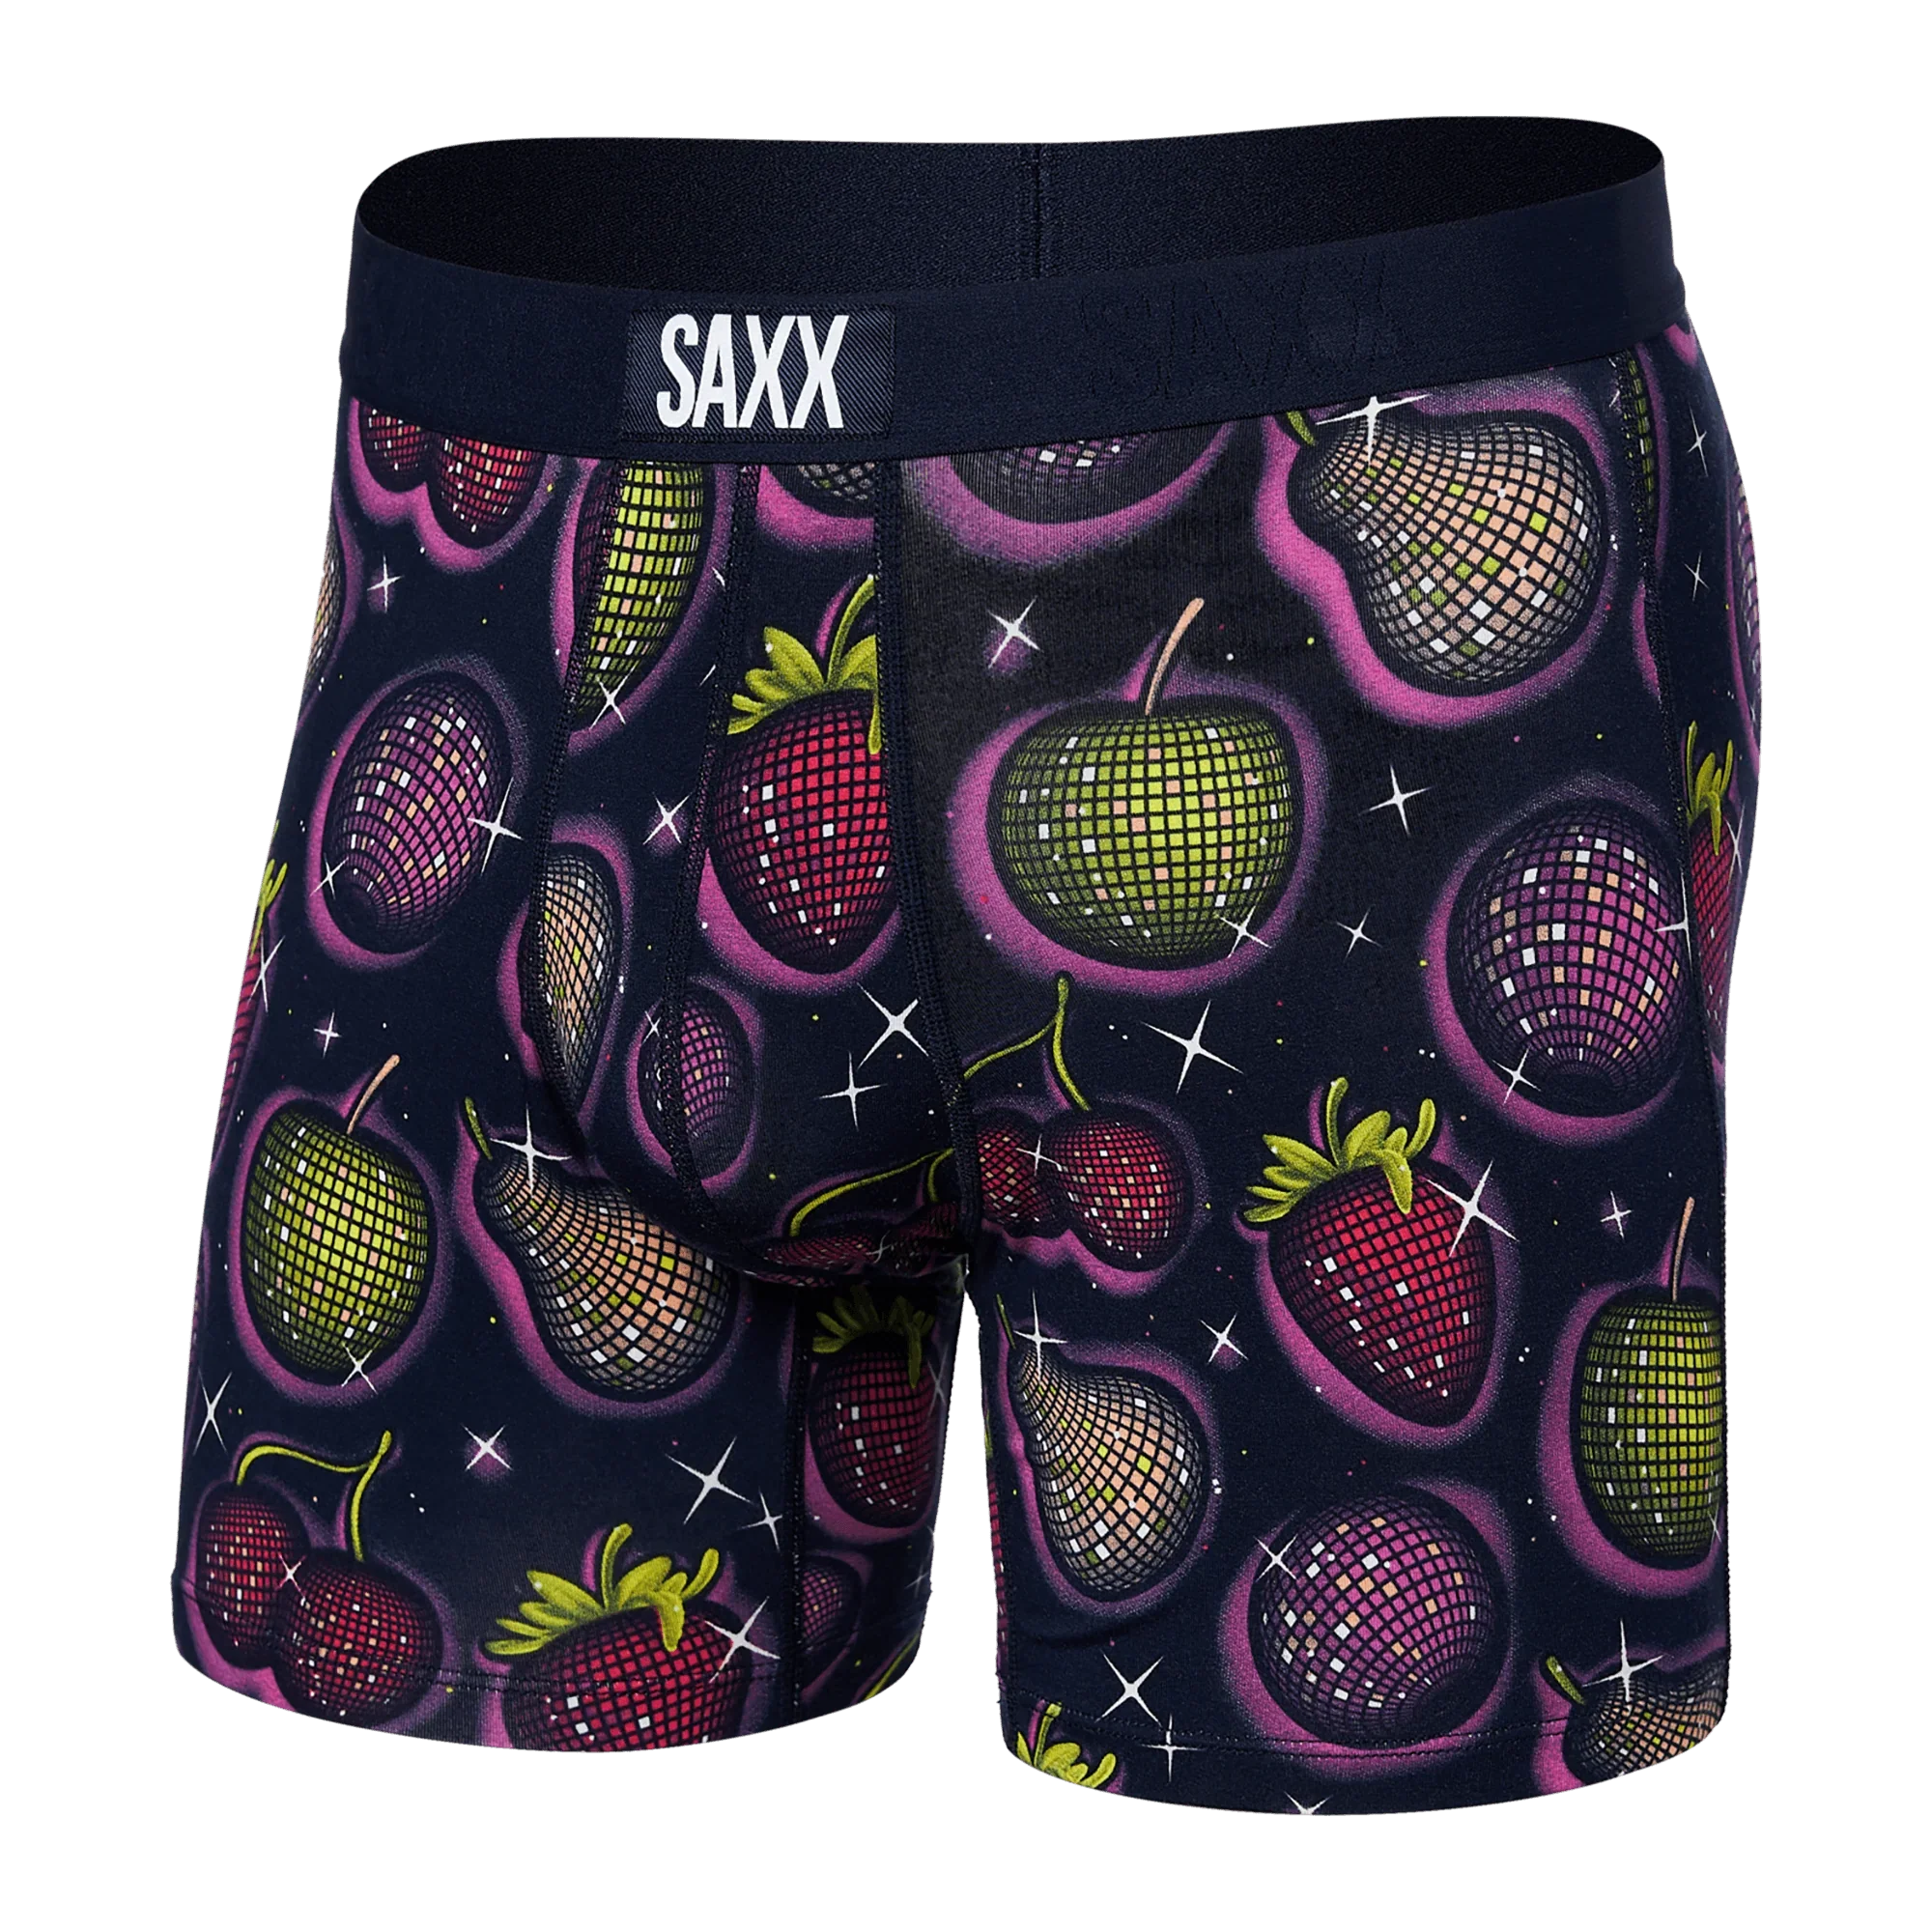 'SAXX Vibe Super Soft Boxer Brief - Disco Fruit' in 'Maritime Blue' colour